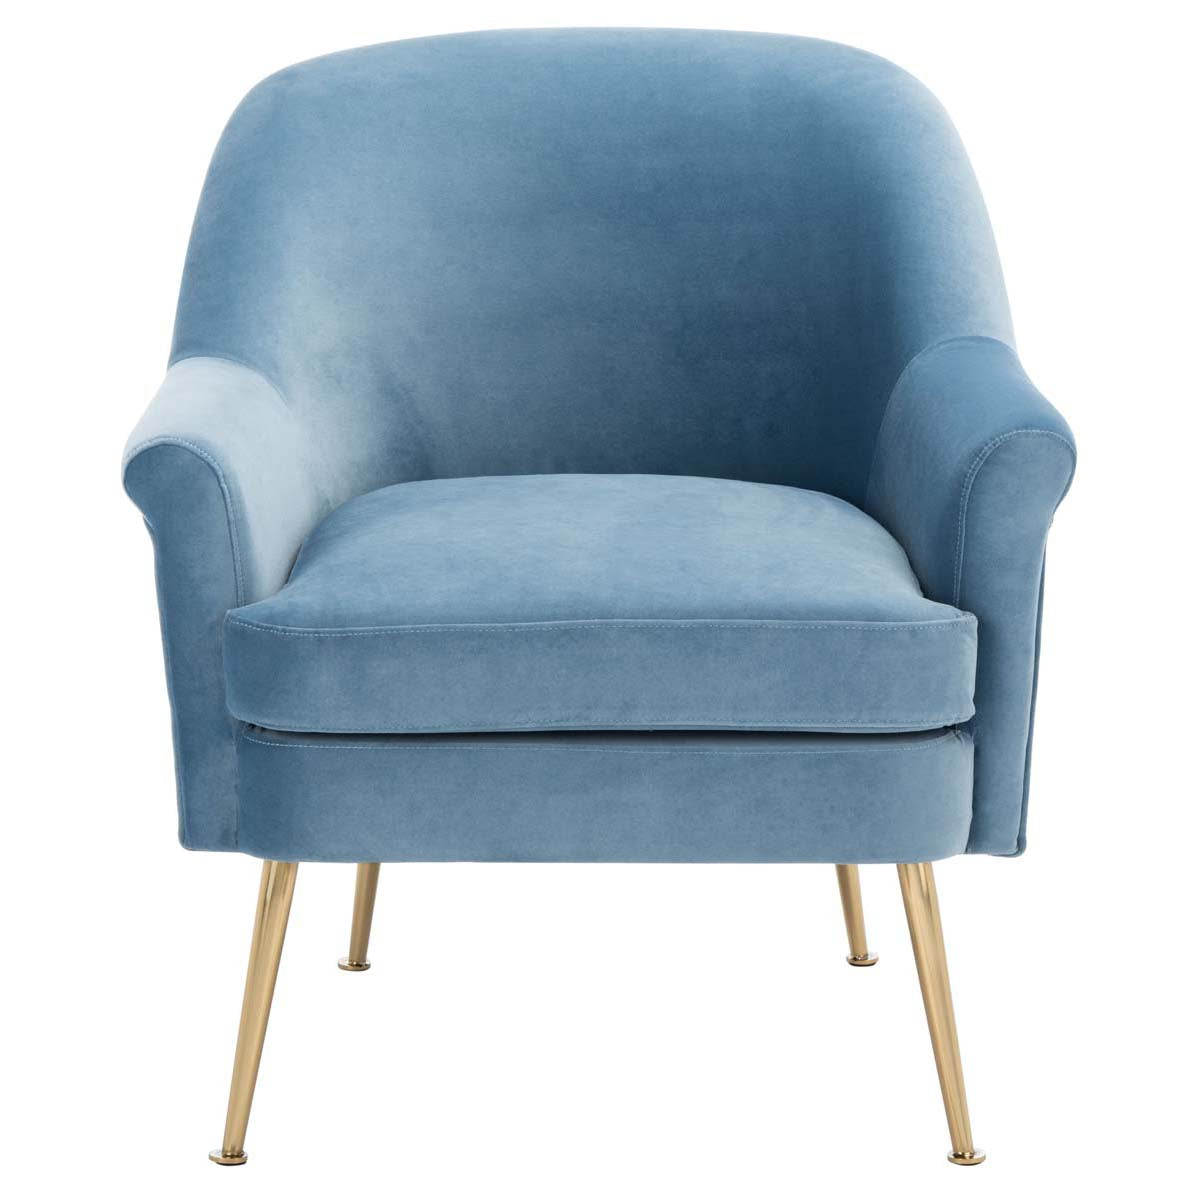 Safavieh Rodrik Accent Chair , ACH4005 - Light Blue